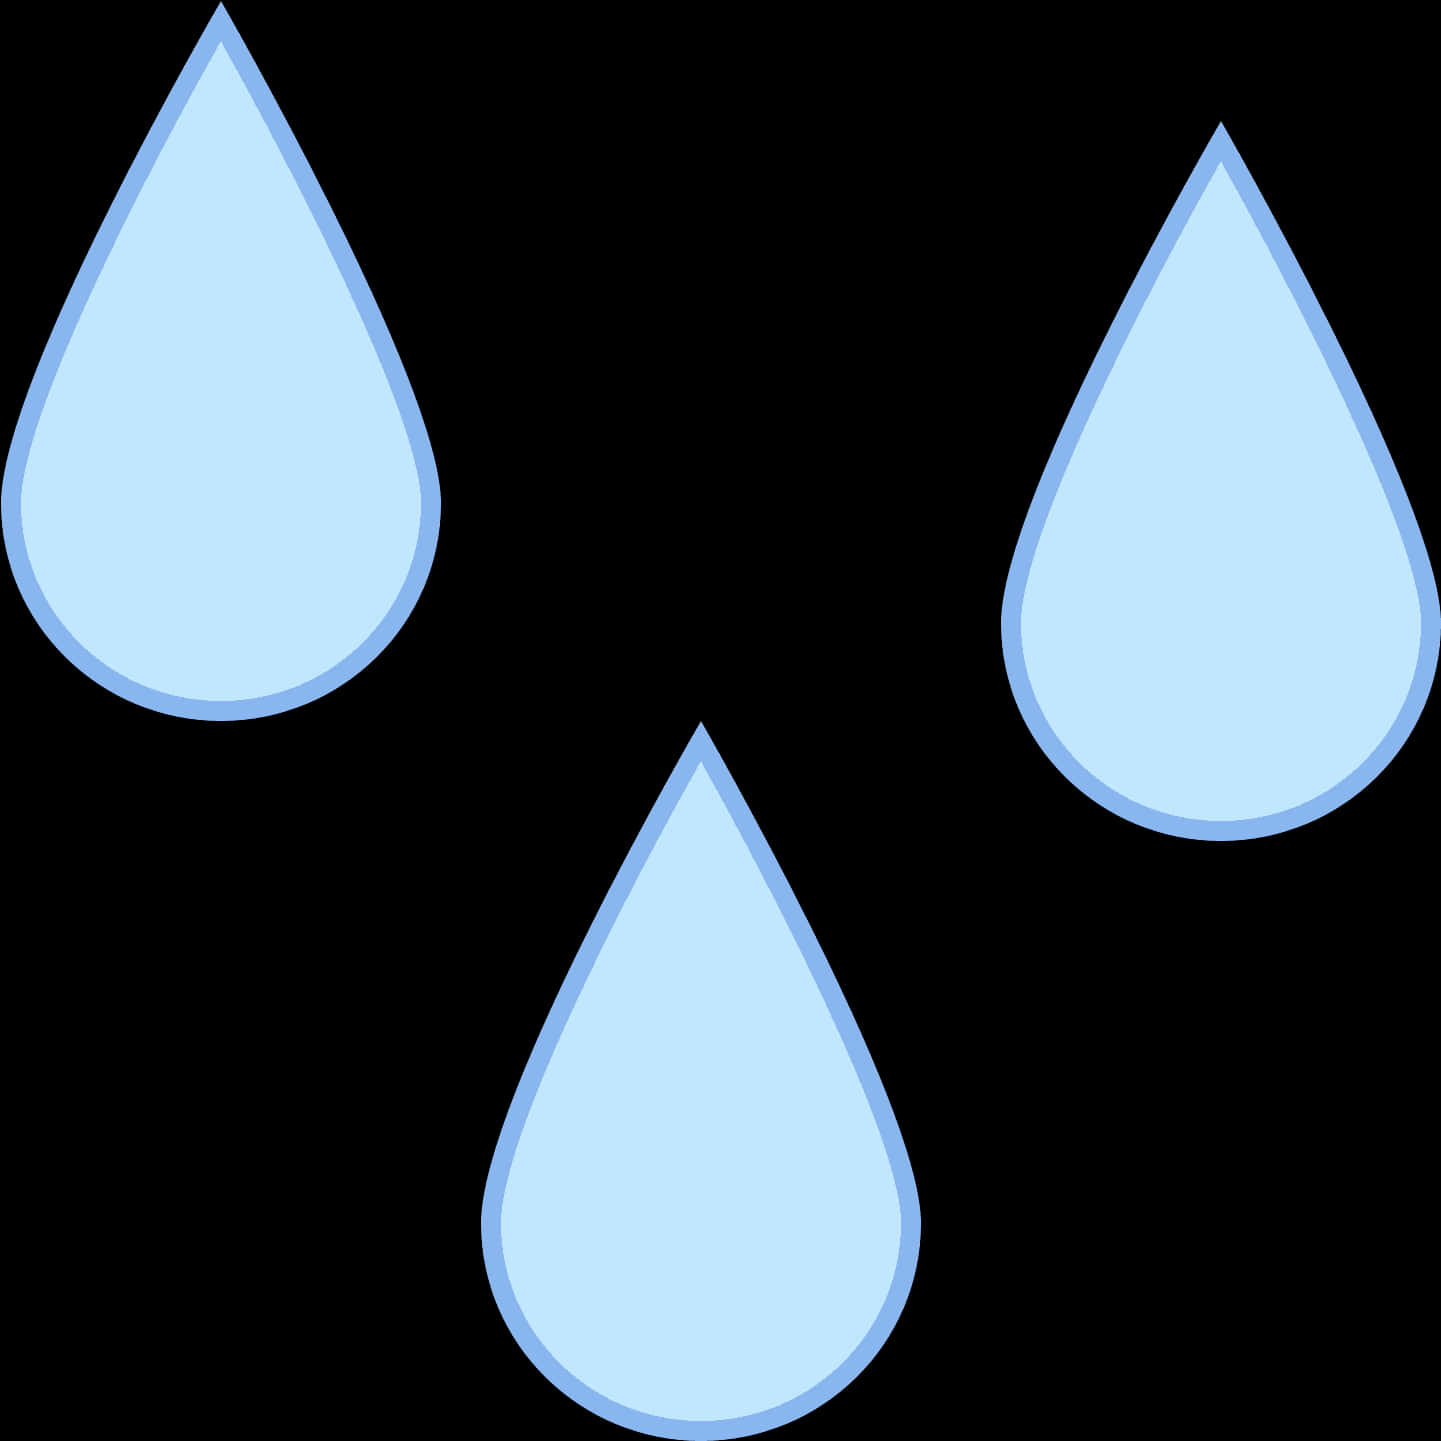 Blue Water Drops Vector Illustration